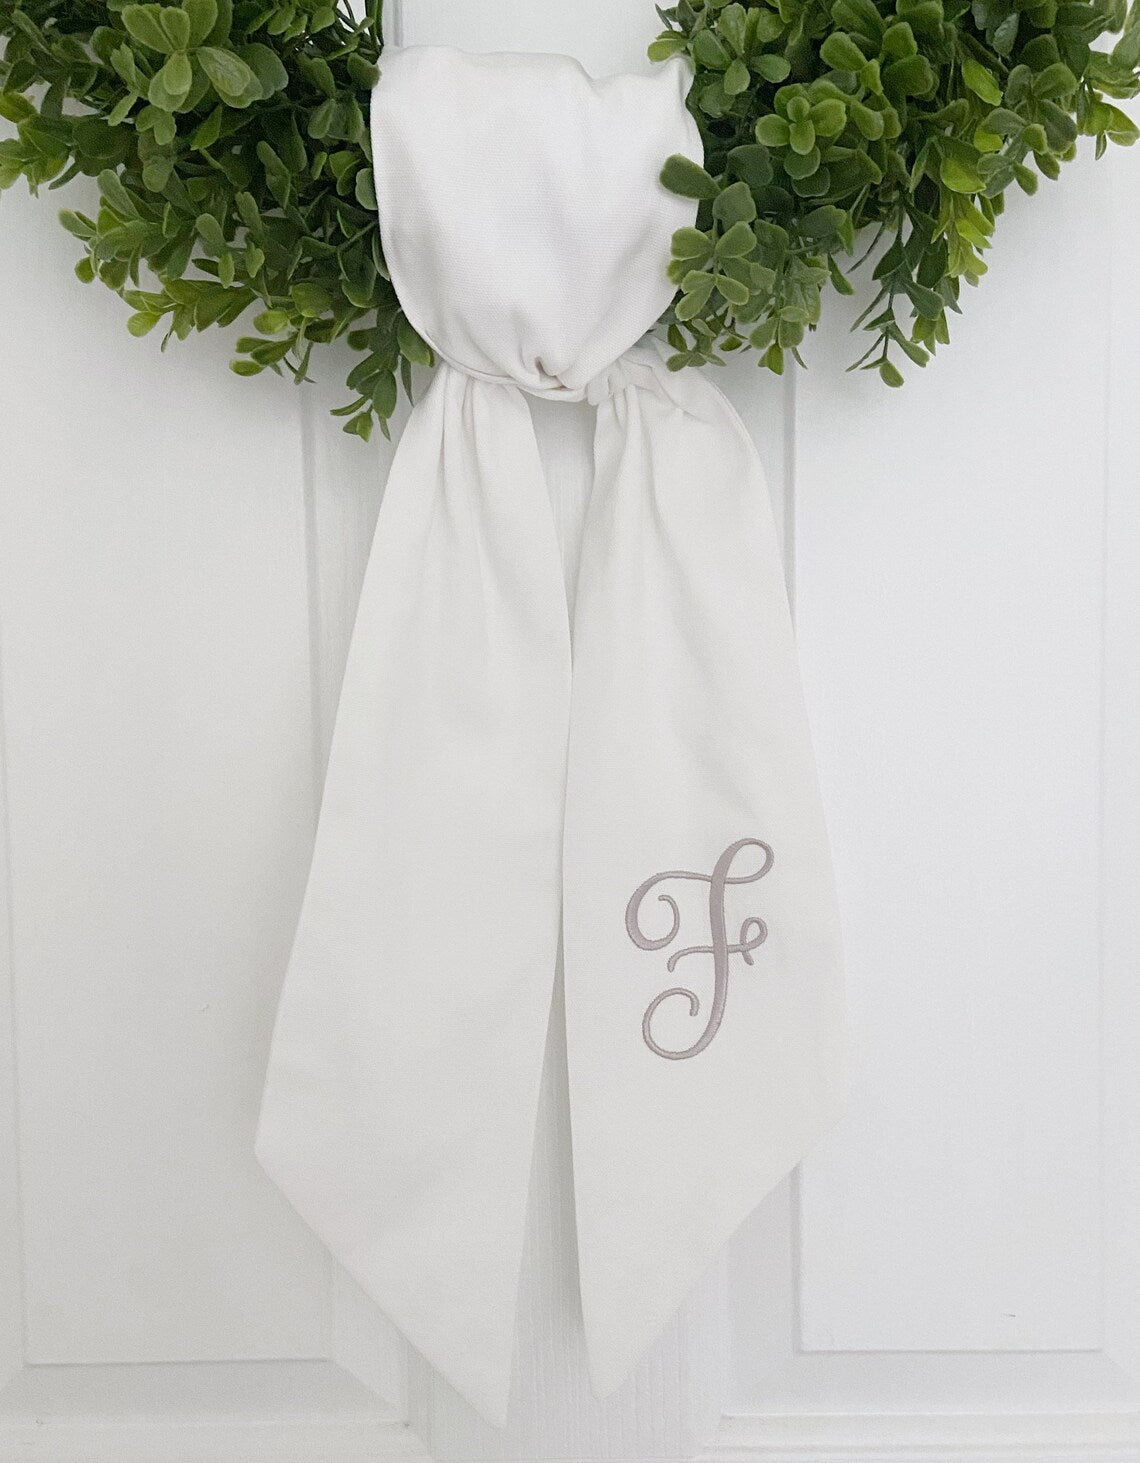 White Monogrammed Wreath Sash